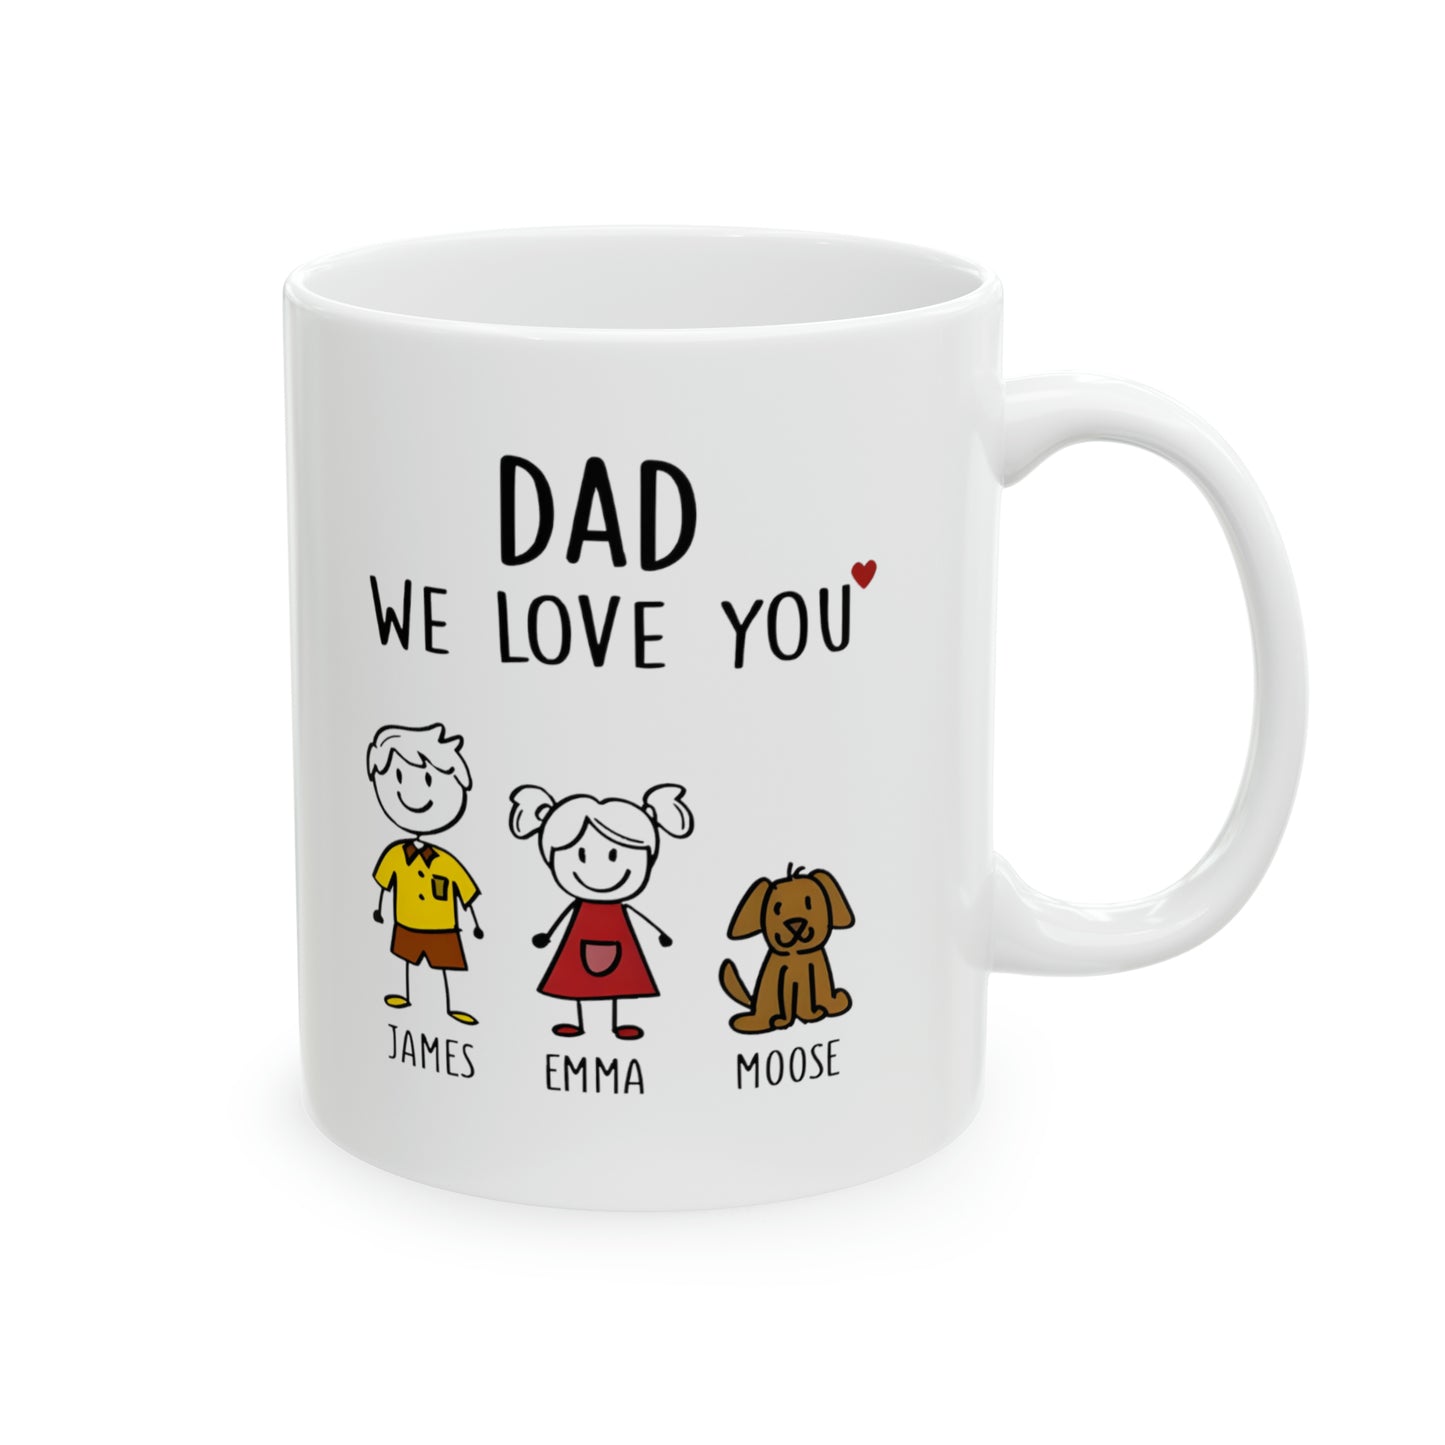 Dad We Love You Custom Printed Mug, Father's Day Gift